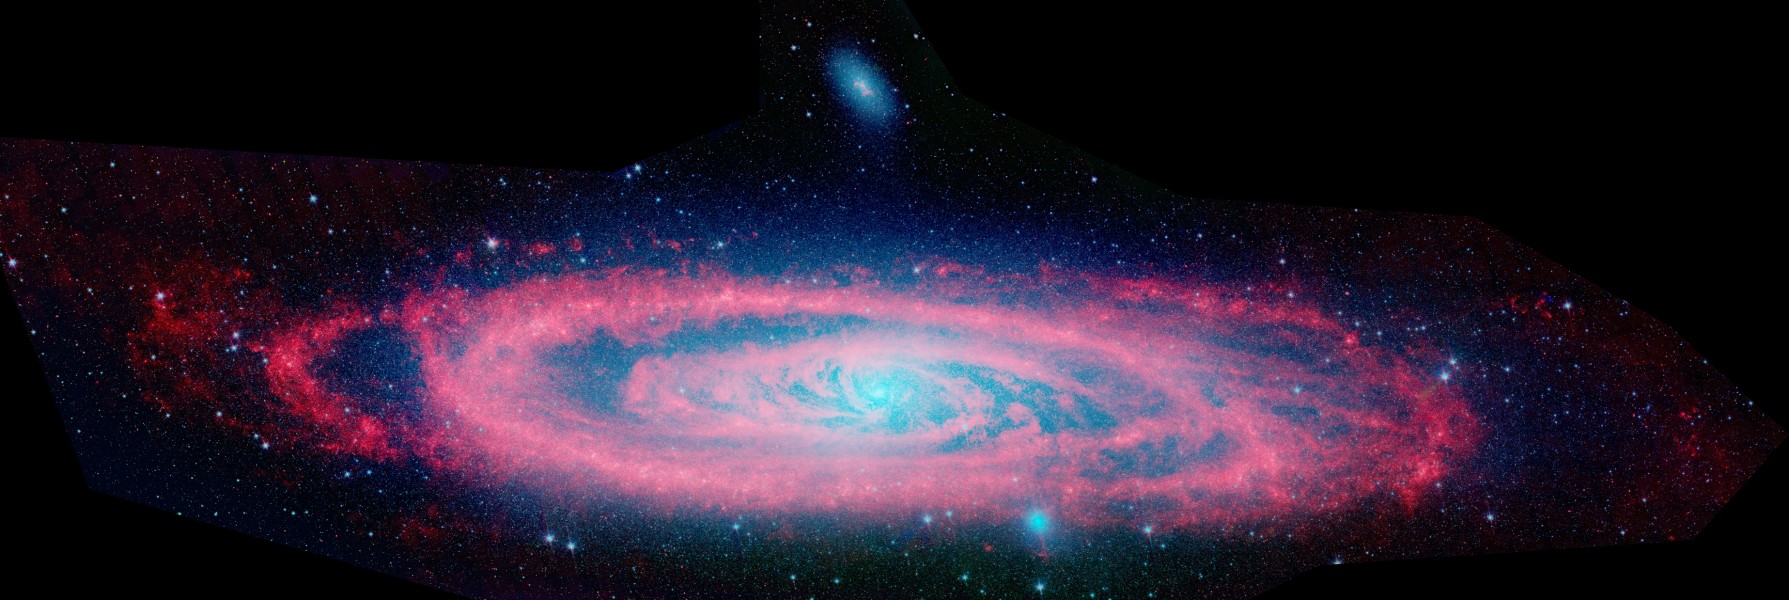 Andromeda Galaxy Spitzer